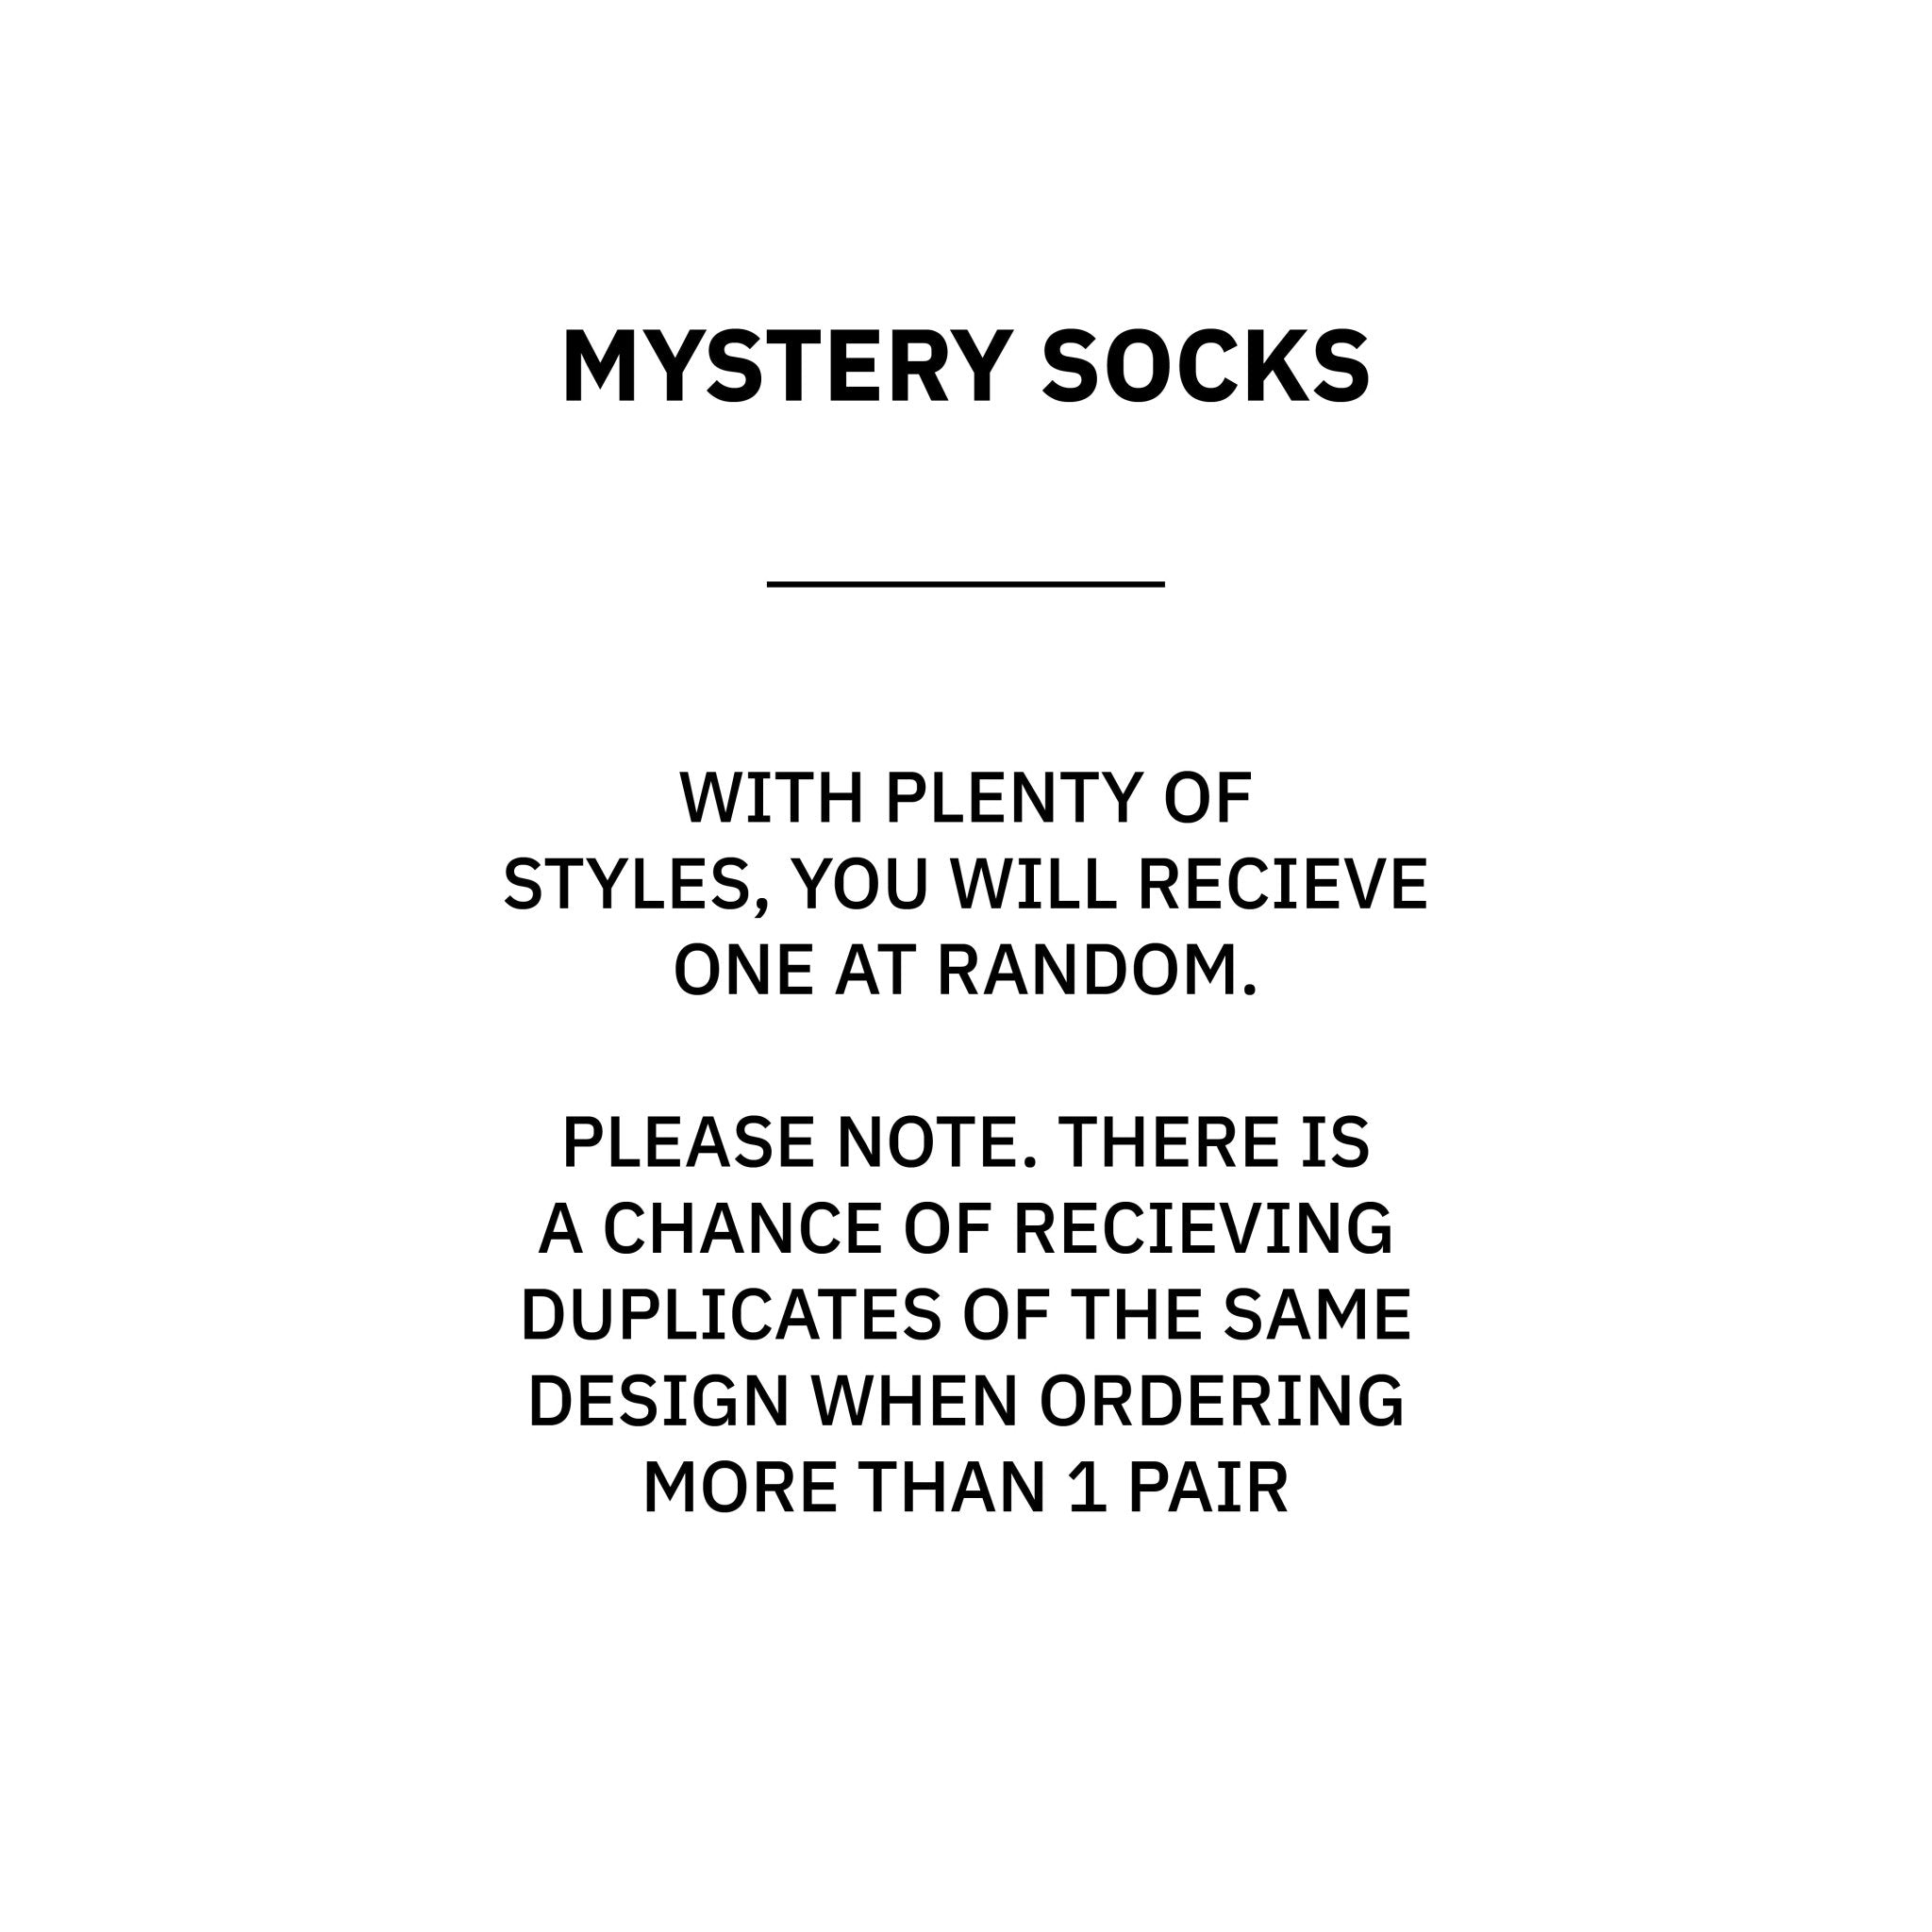 Mystery Crew Sock - Kecks